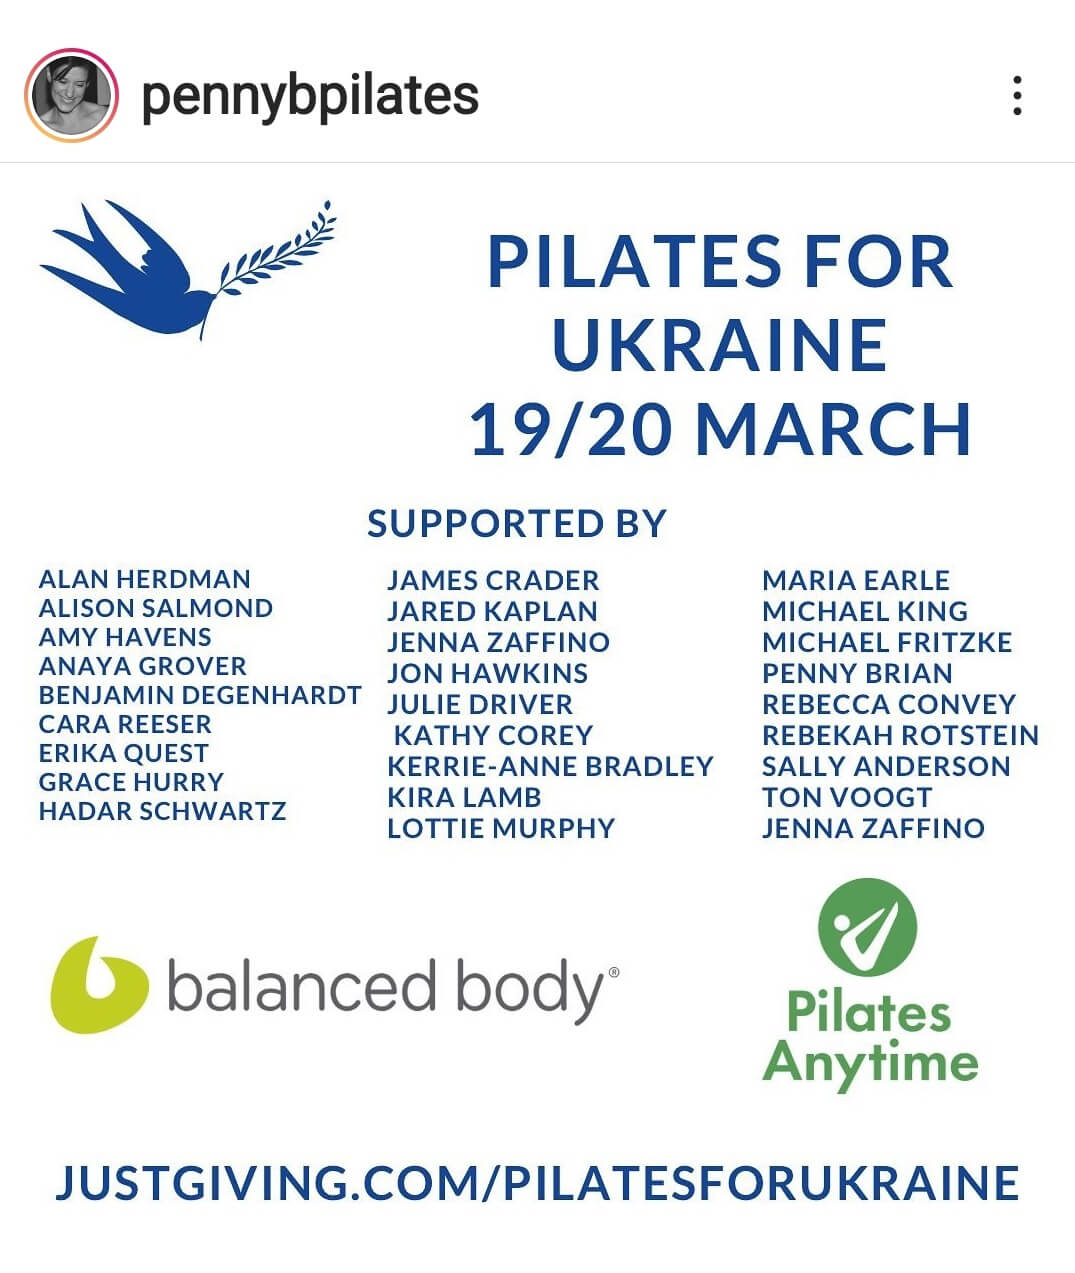 2Pennybpilatesforukraine - Pilates con Ucrania